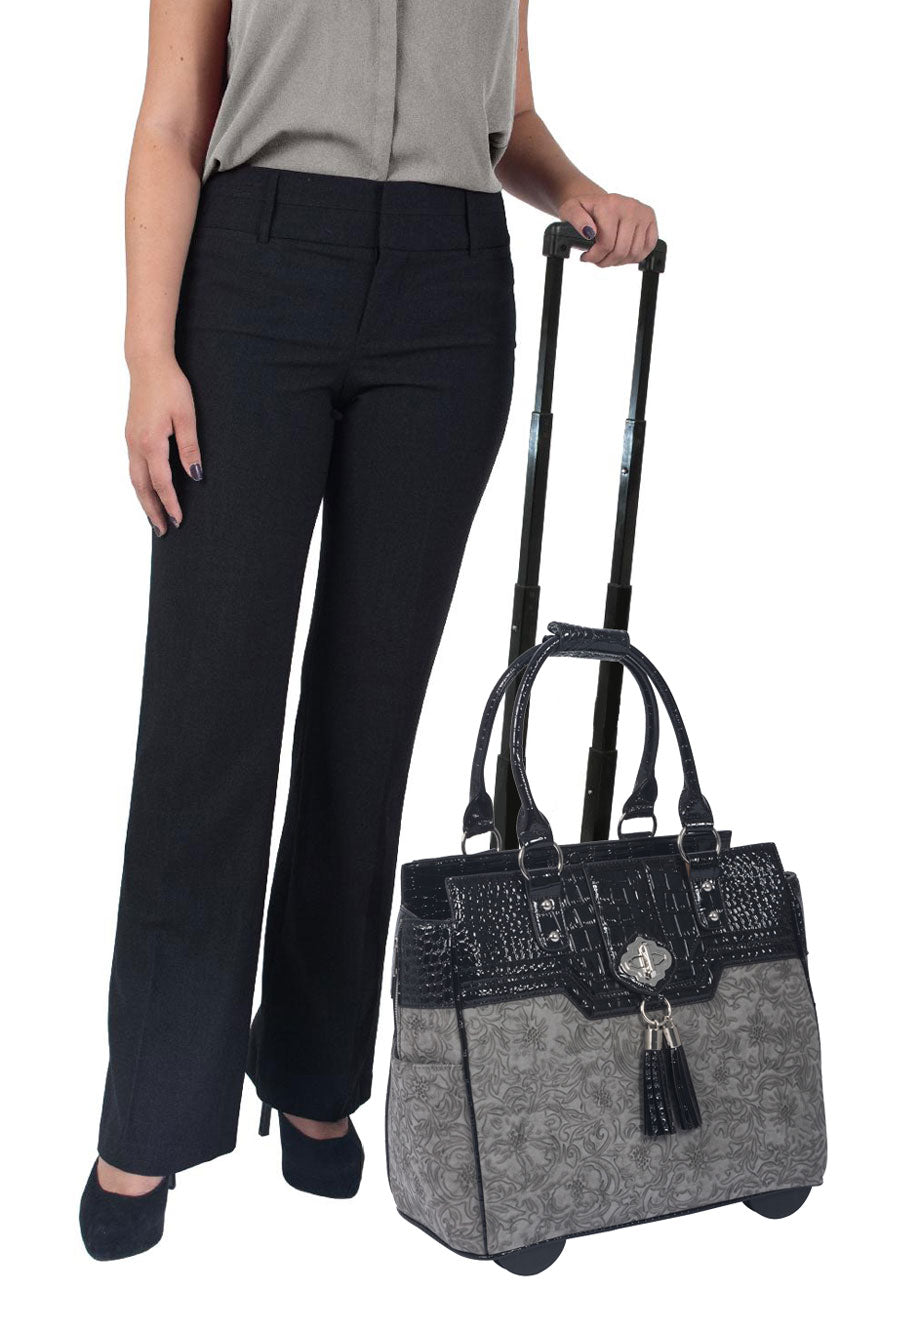 "THE SAVANNAH" Vintage Style Grey & Black Rolling Laptop Carryall Trolley Bag - JKM and Company - Custom Rolling Handbags